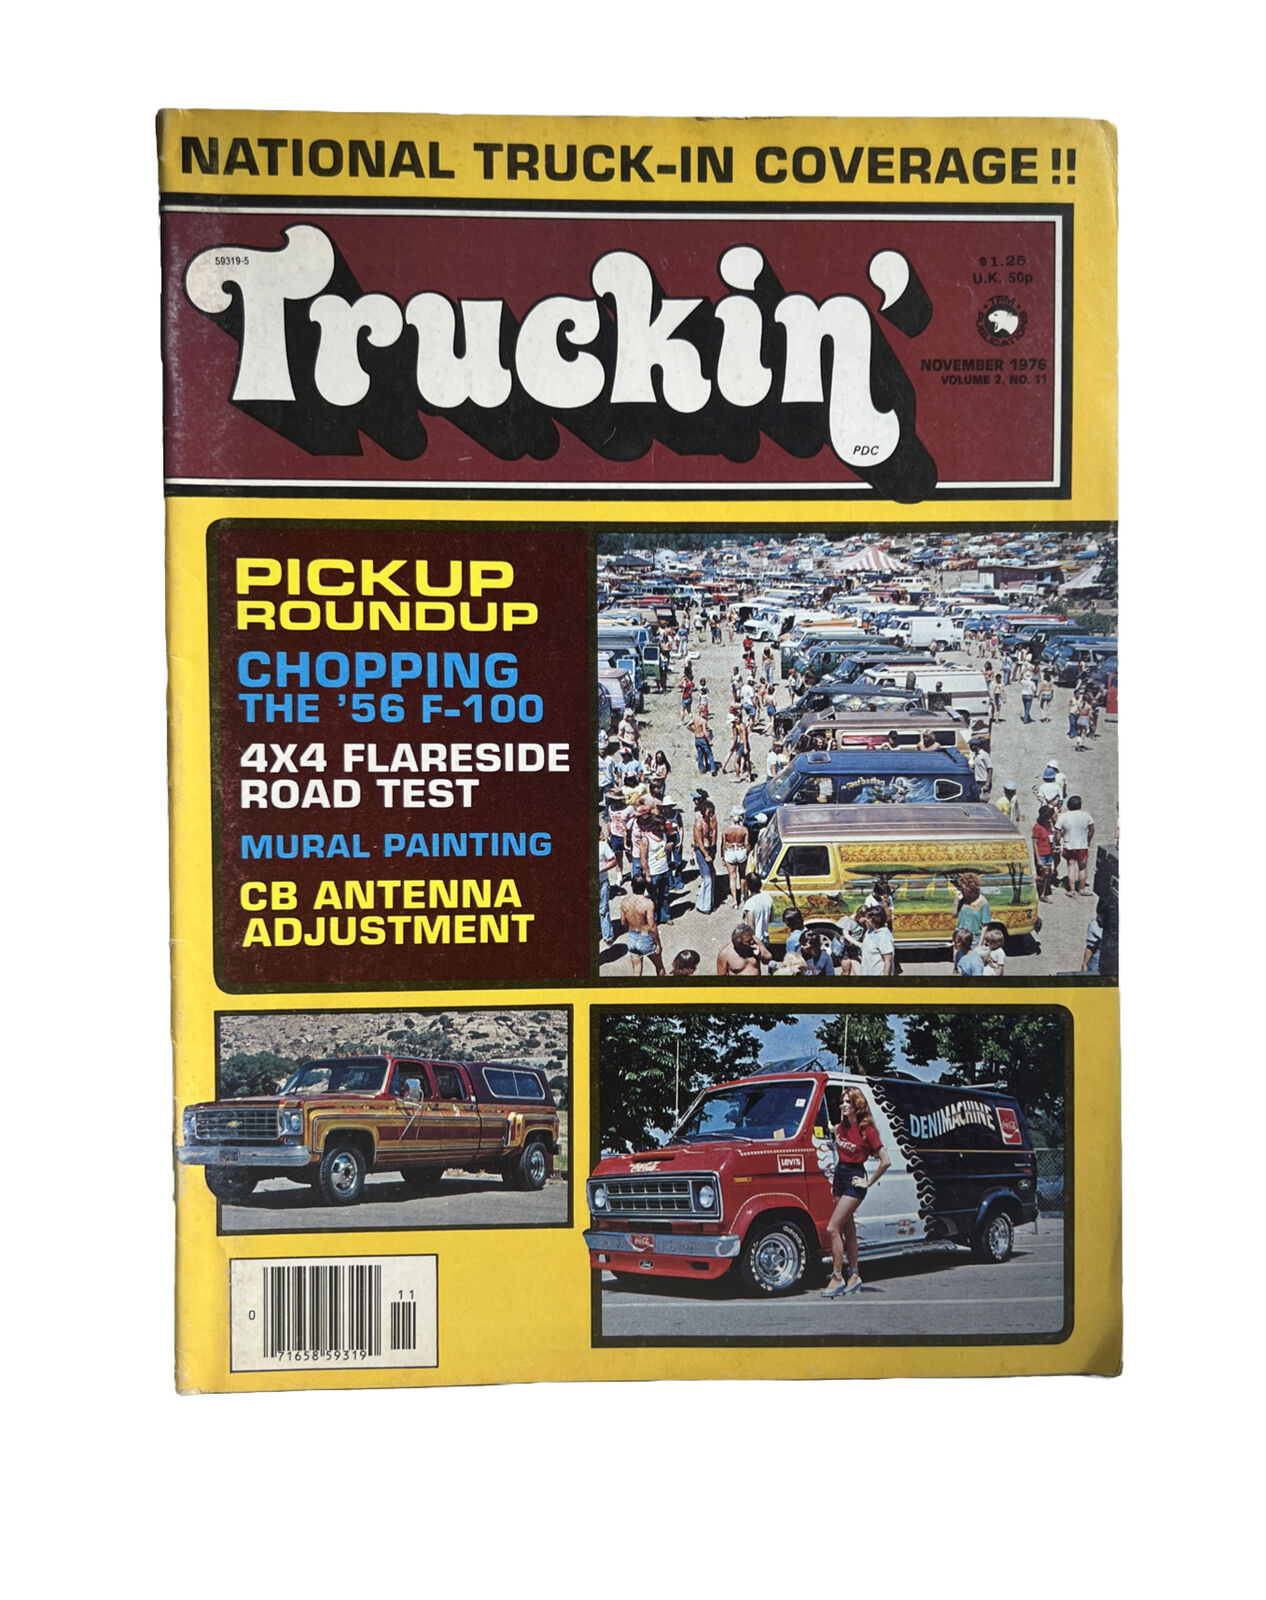 Truckin VINTAGE CUSTOM TRUCK MAGAZINE Pickup Roundup November 1976 Vol 2 No 11